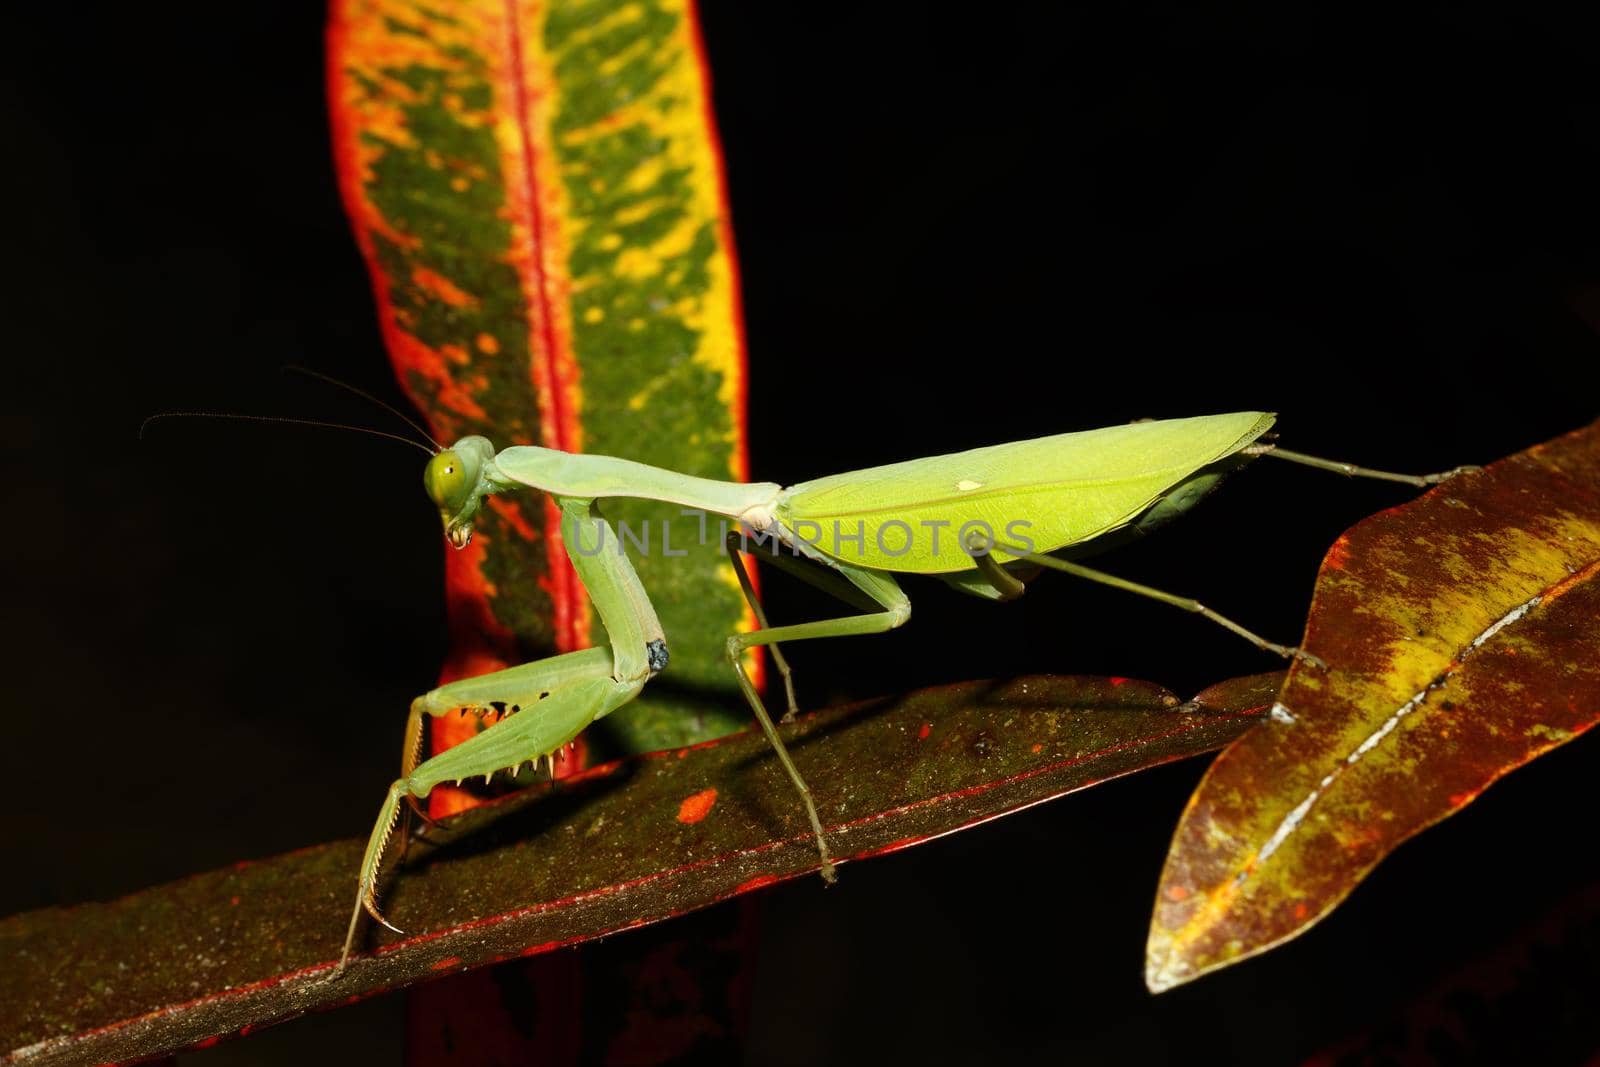 praying mantis on leaf, Sulawesi, Indonesia by artush